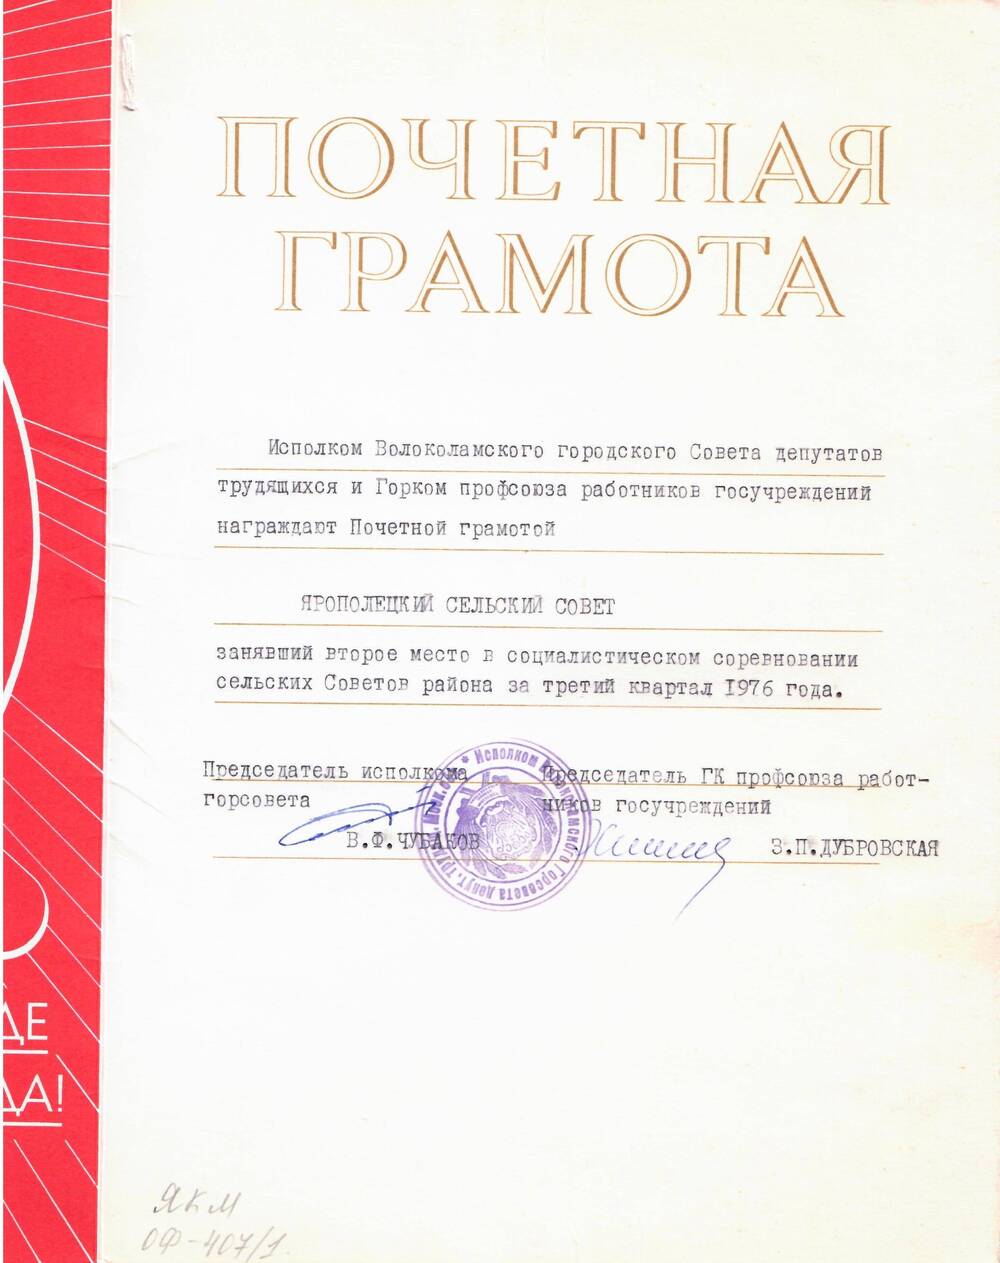 Почетная грамота, награжден Ярополецкий с/совет, занявший II место в соц. соревнованиях района за III квартал 1976 г.